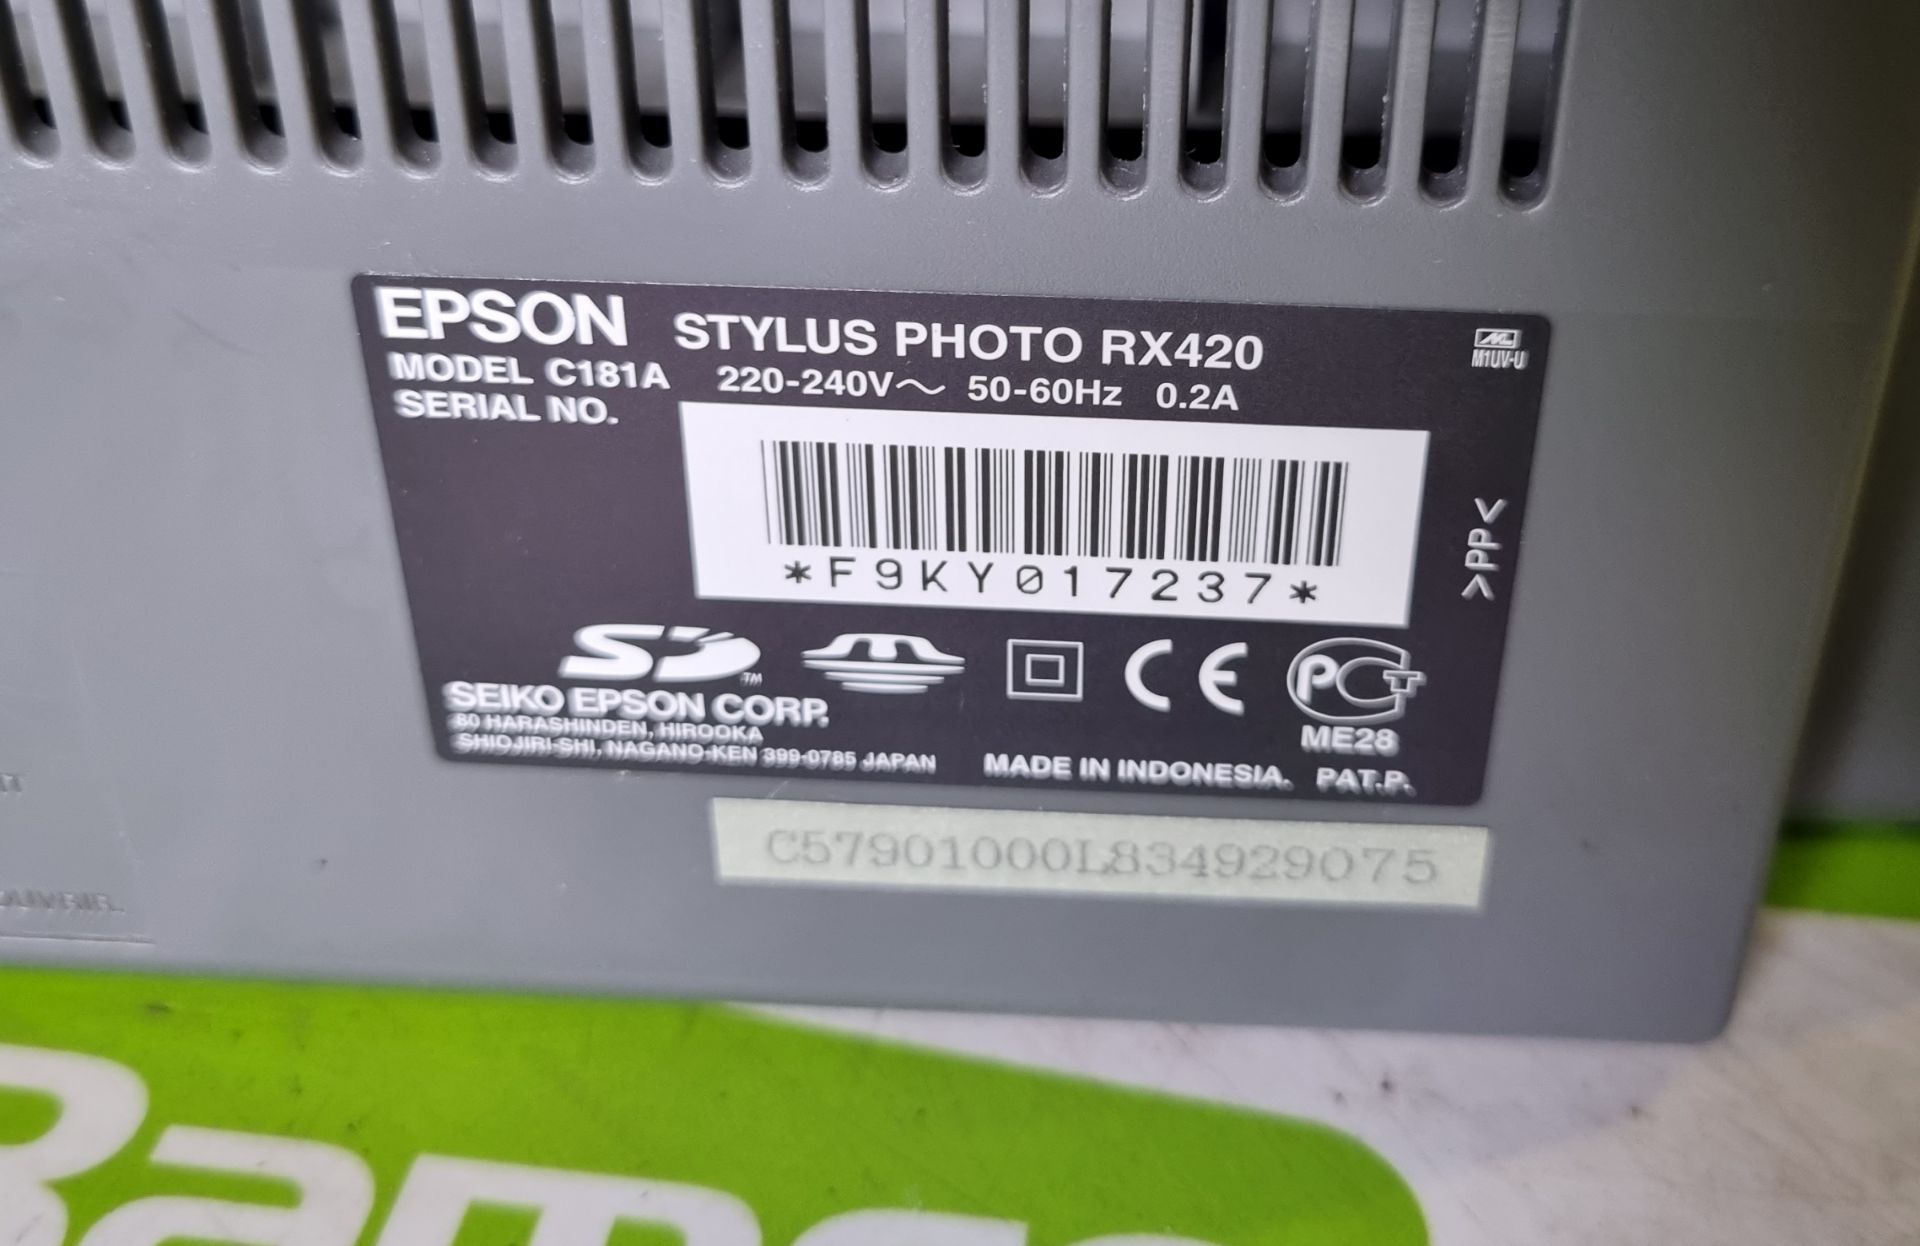 2x Epson Stylus Photo RX420 printer / scanner units - Image 7 of 10